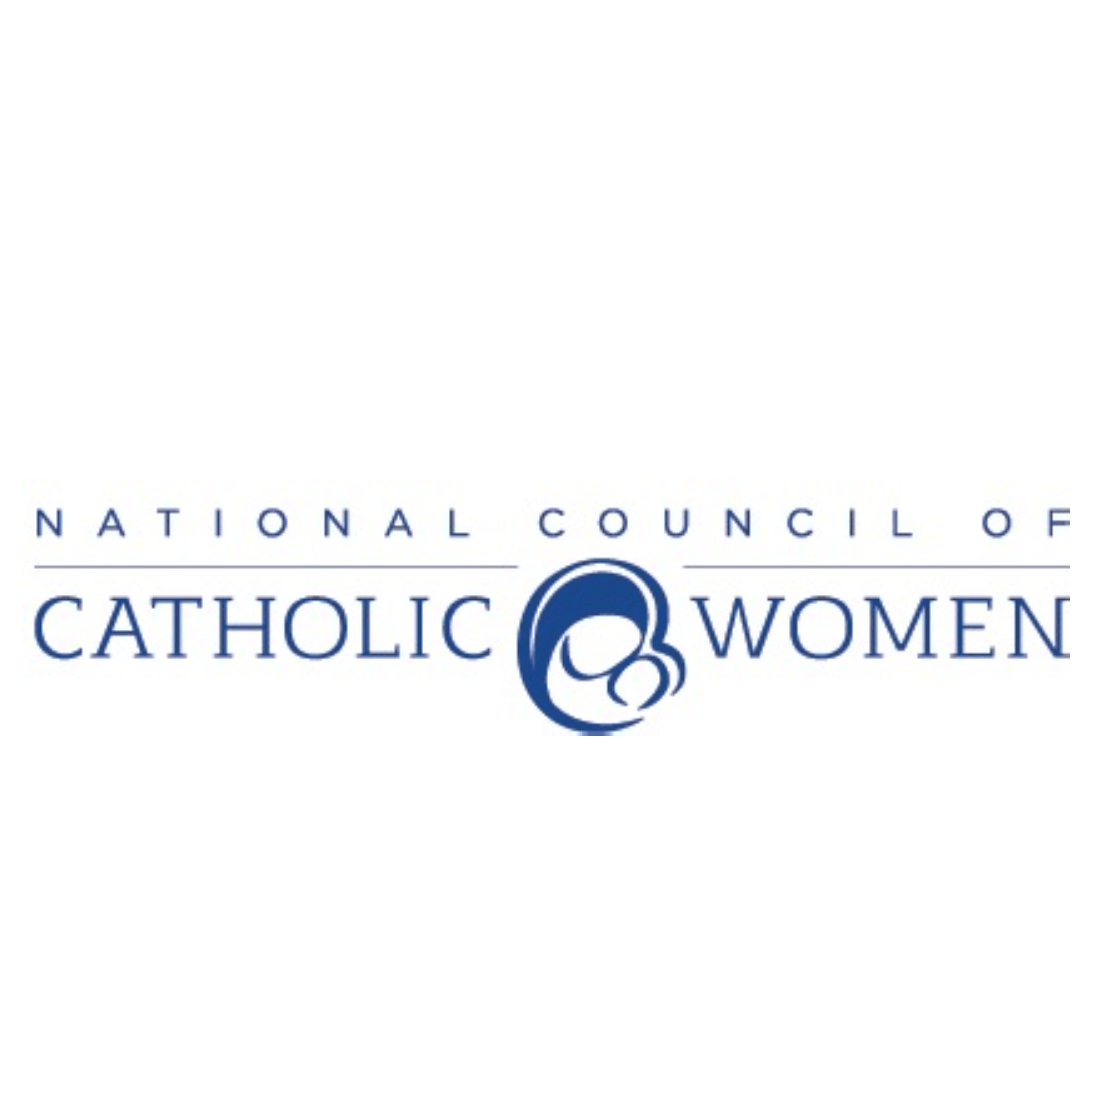 Female Organizations in Virginia - National Council of Catholic Women